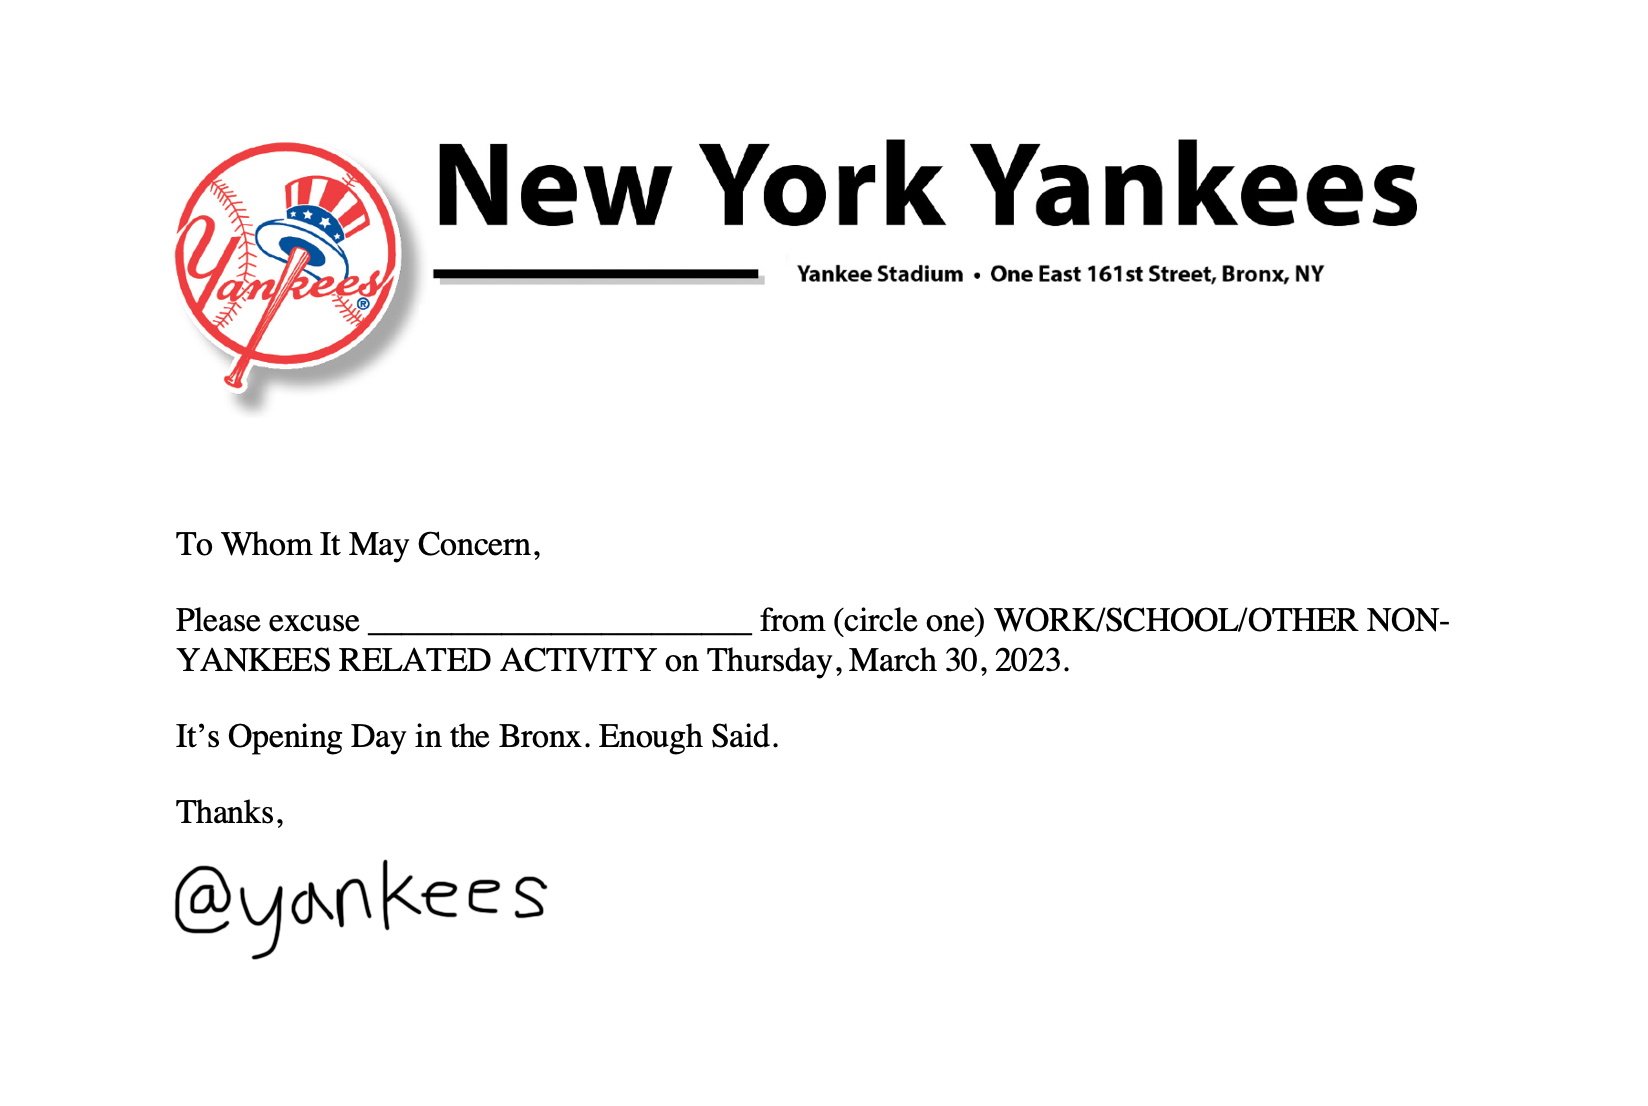 New York Yankees Opening Day 2023 